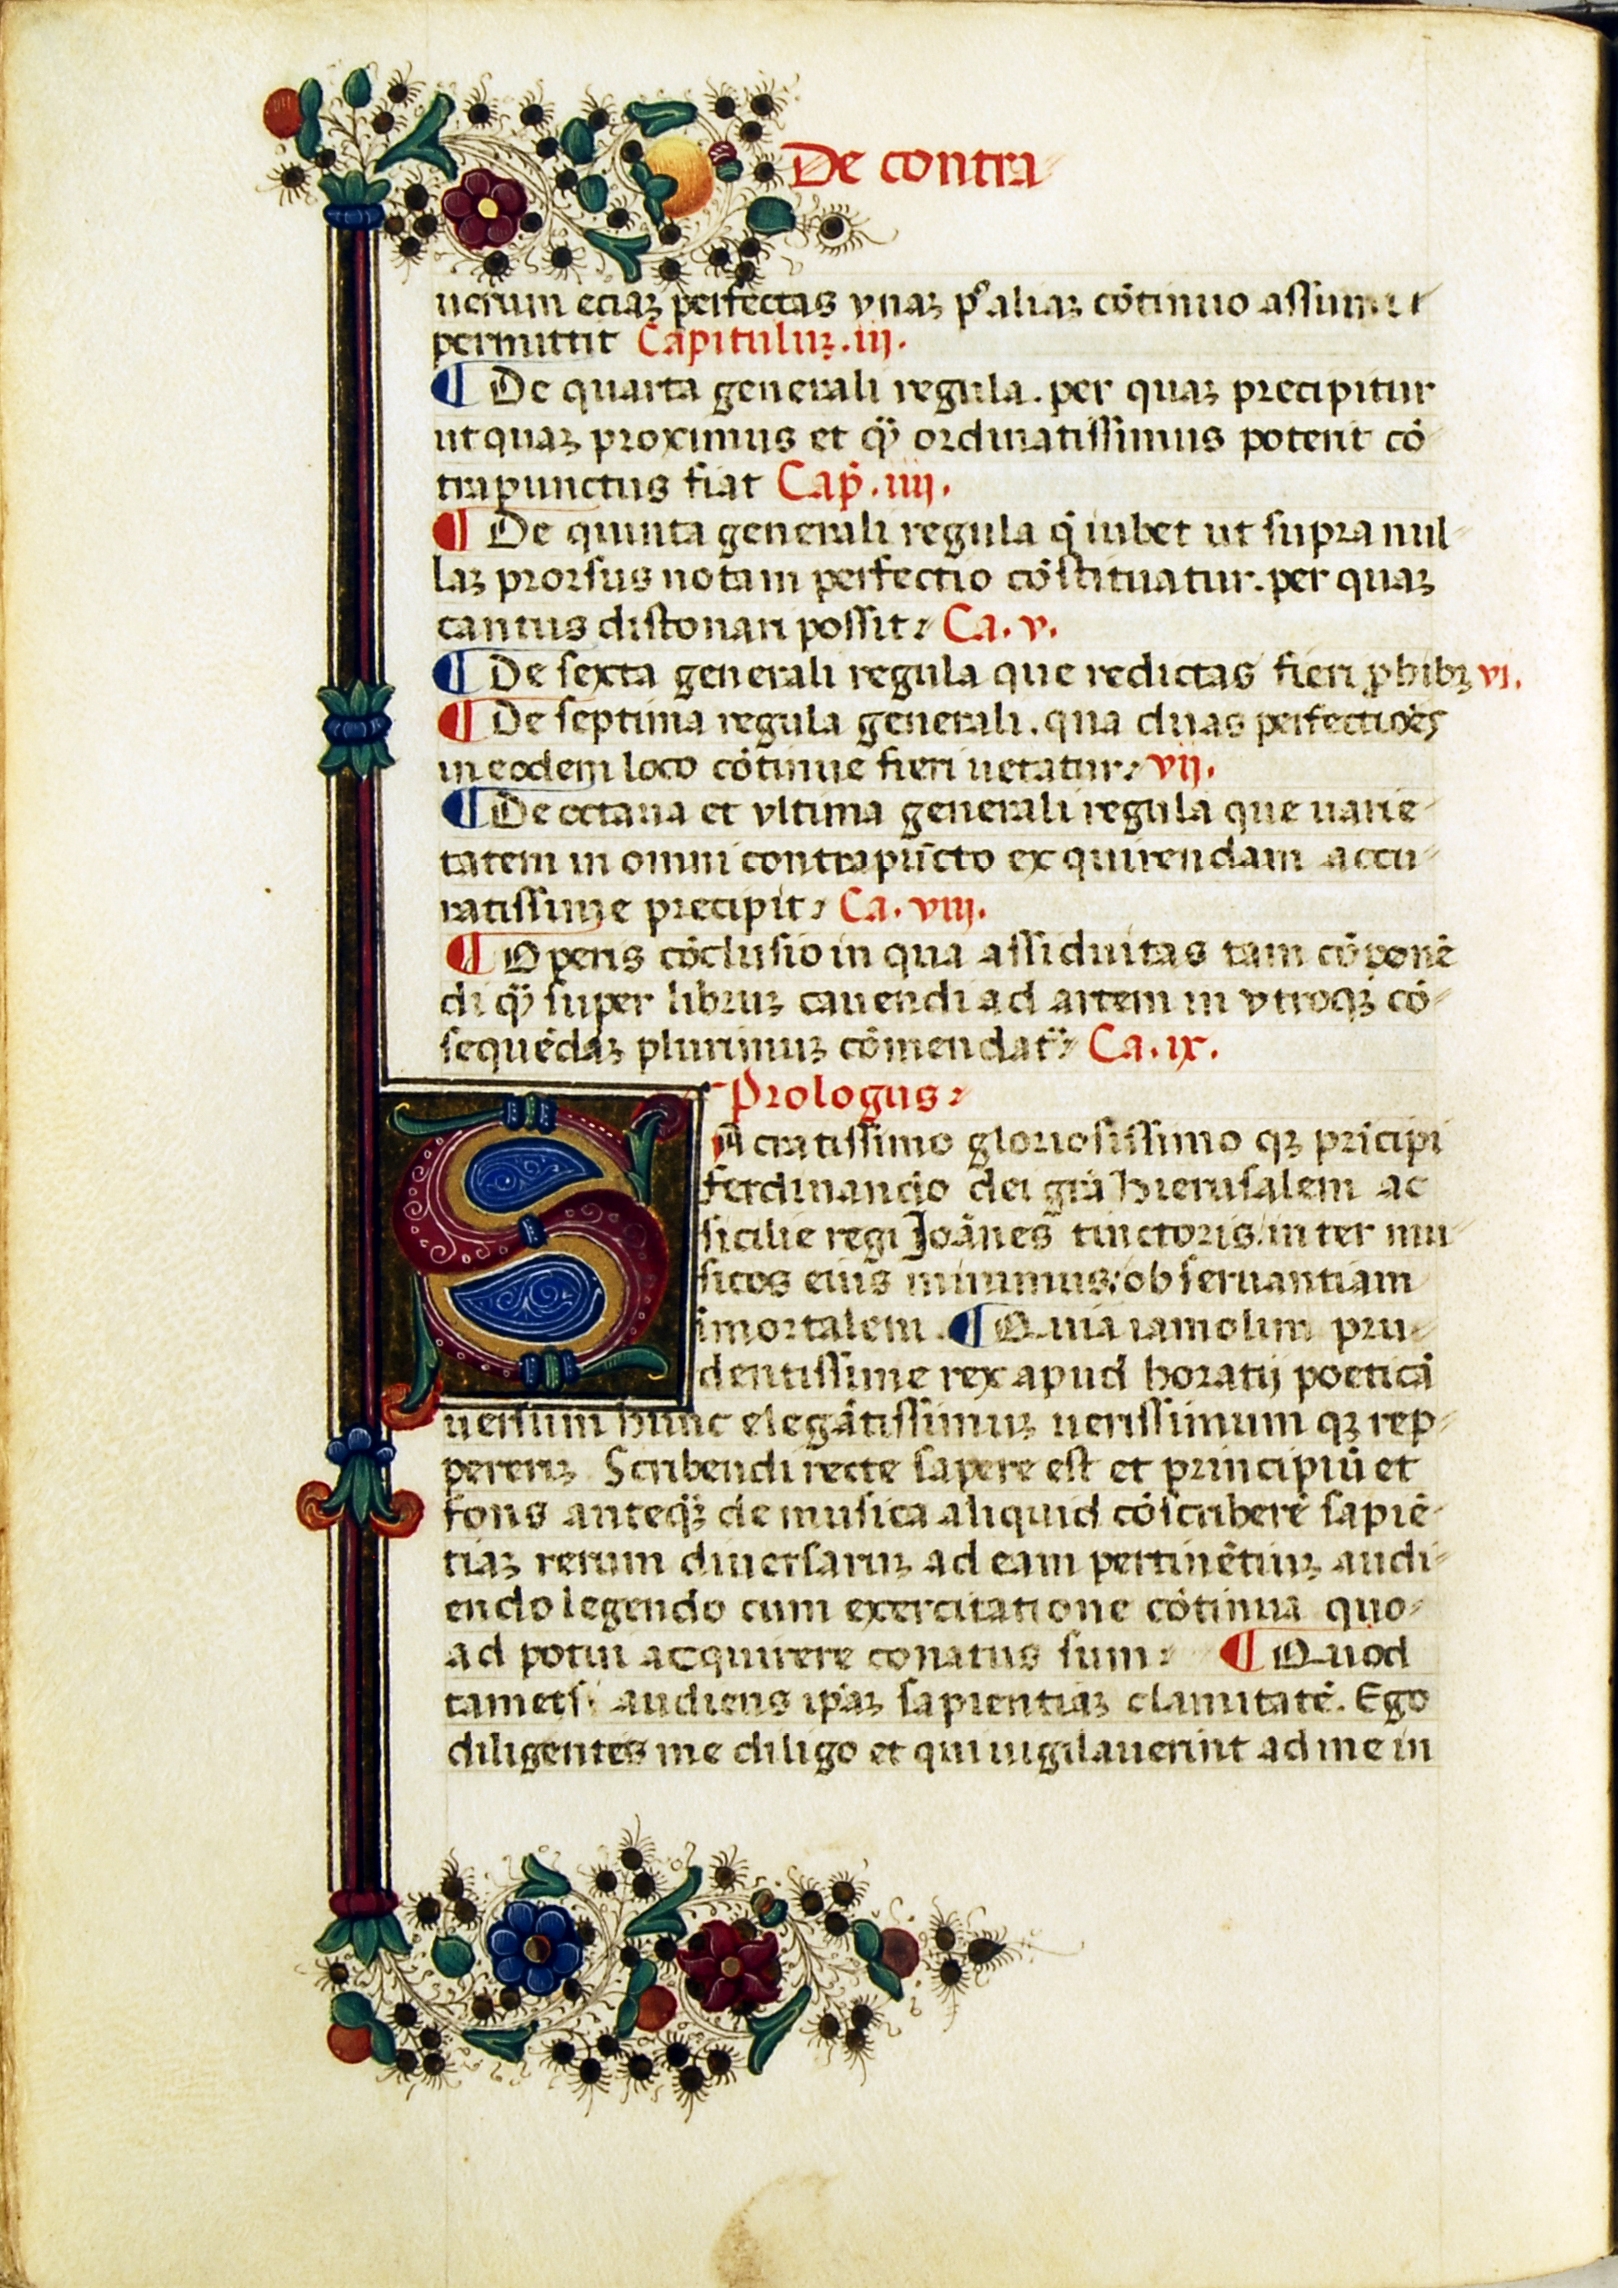 Bologna, Biblioteca Universitaria, MS 2573, fol. 89v. Source: Biblioteca Universitaria, Bologna.